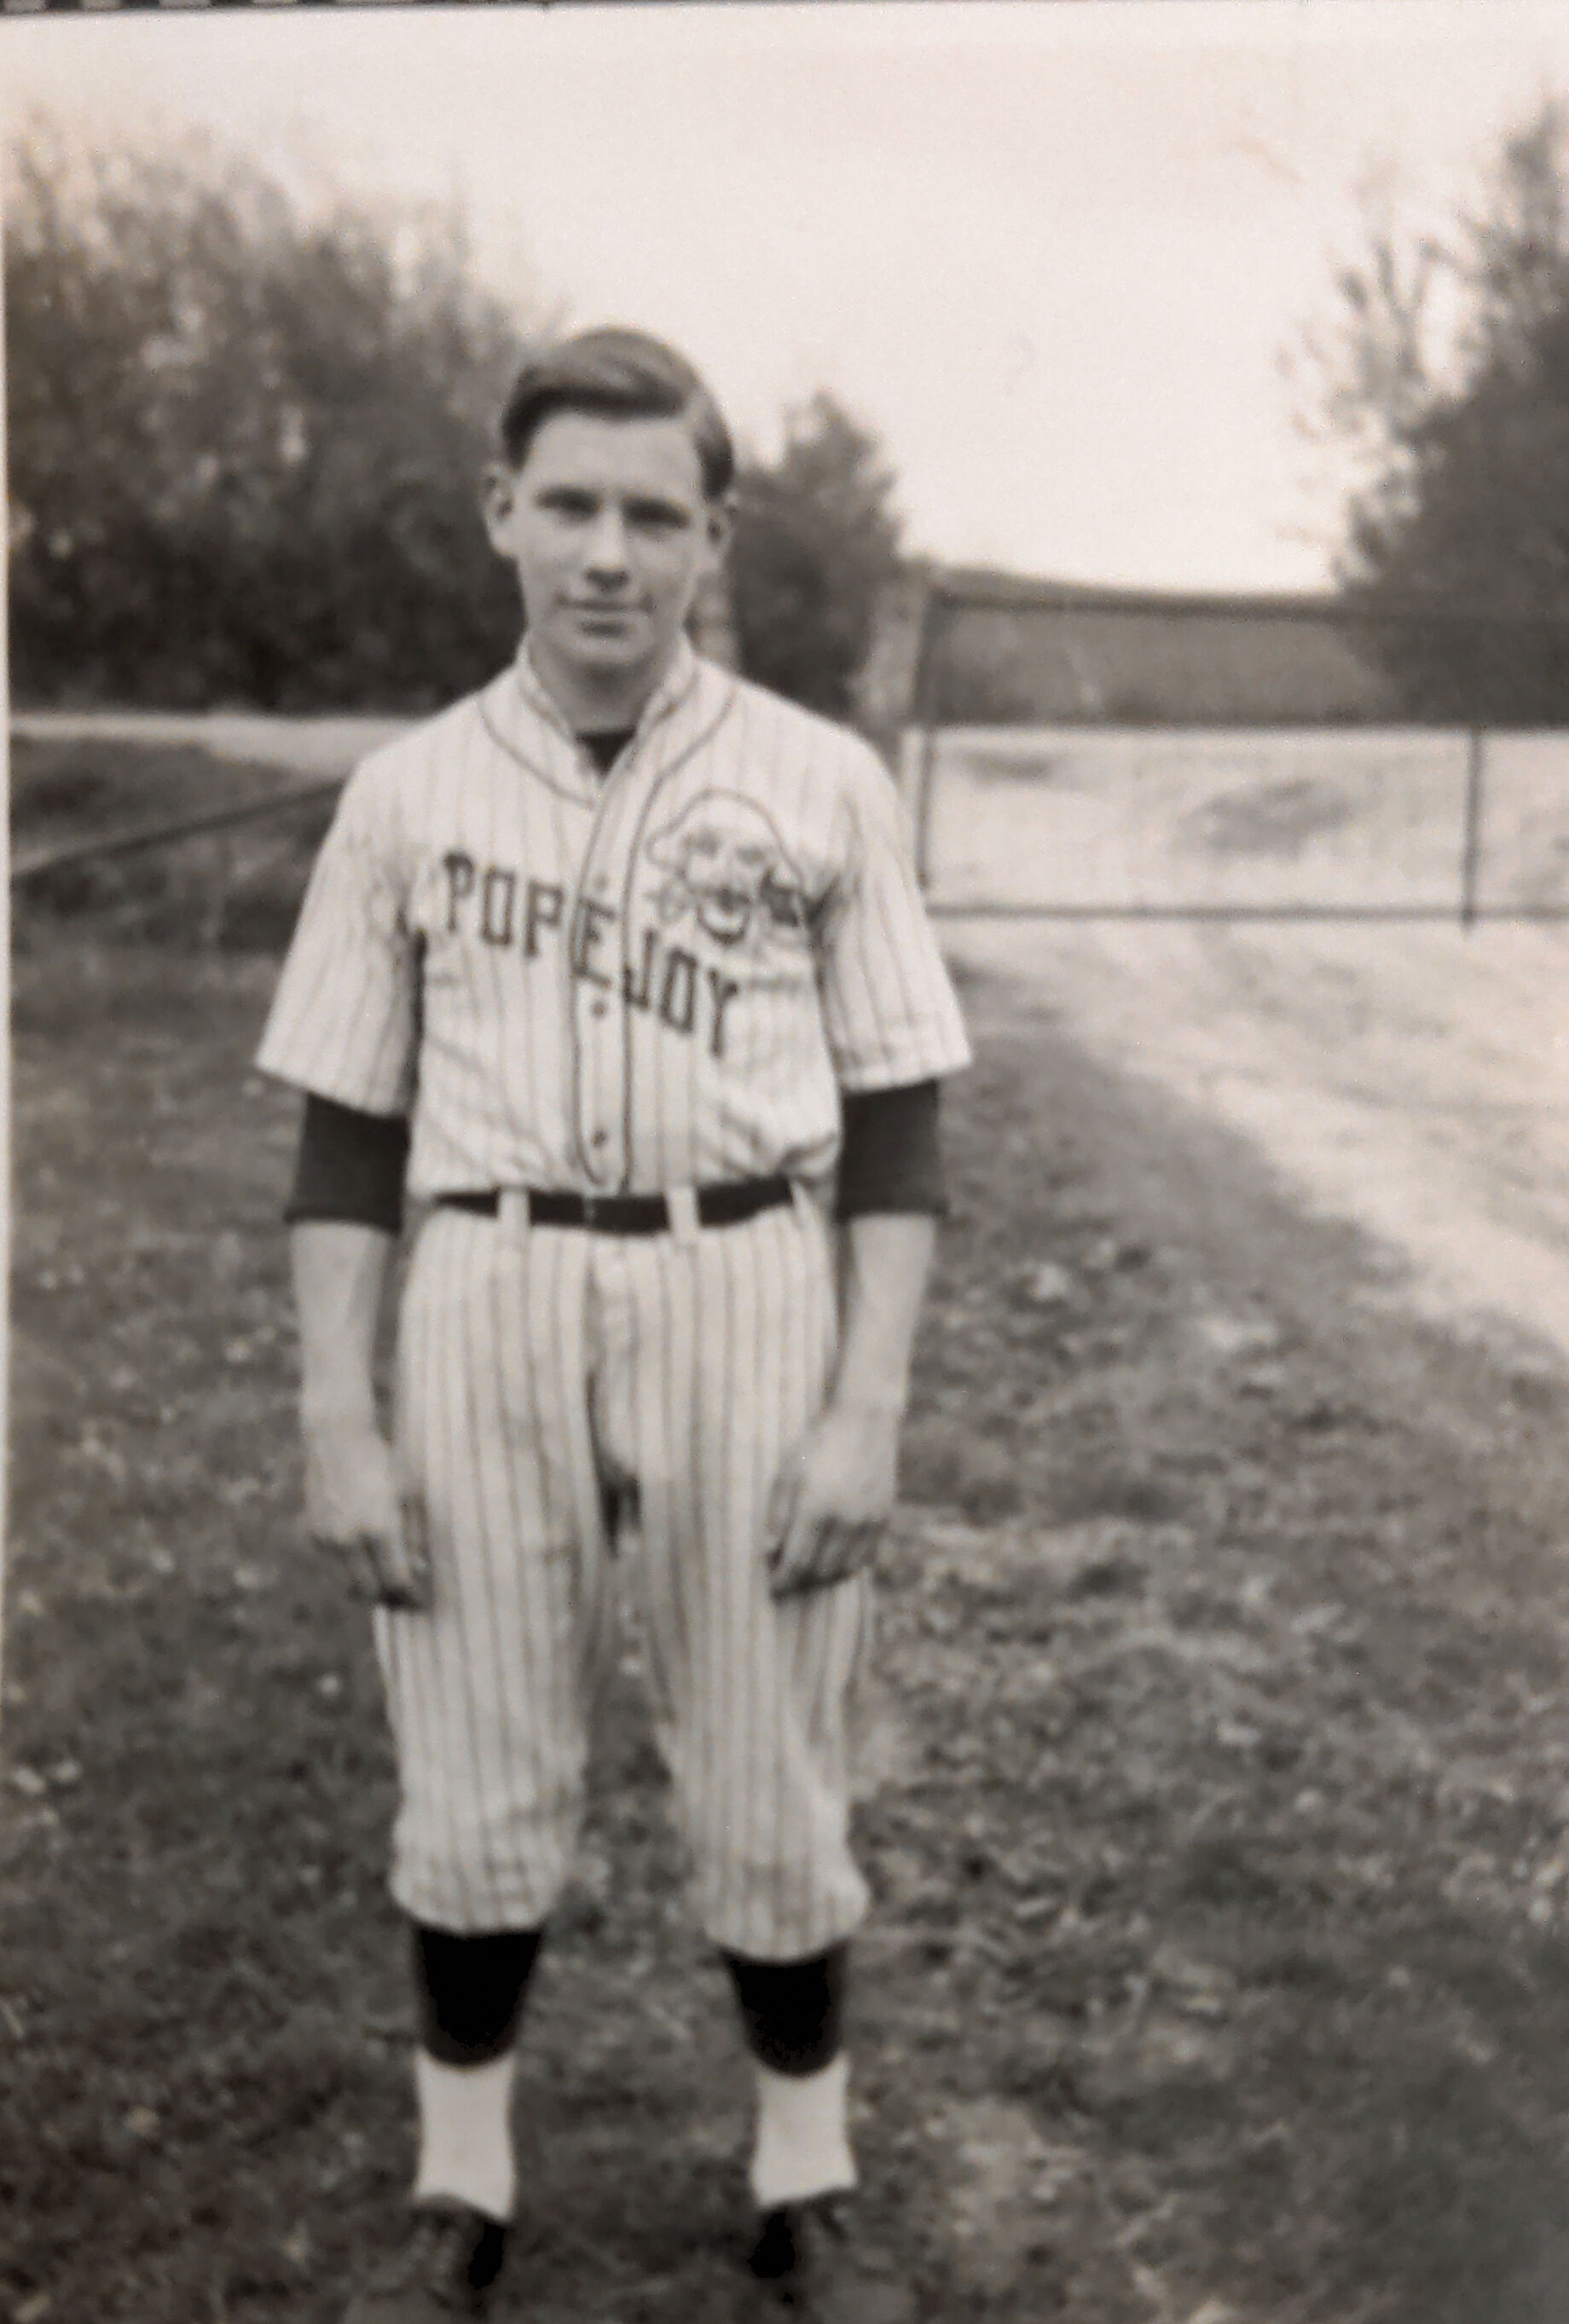 Baseball - Popejoy Iowa abt 1940